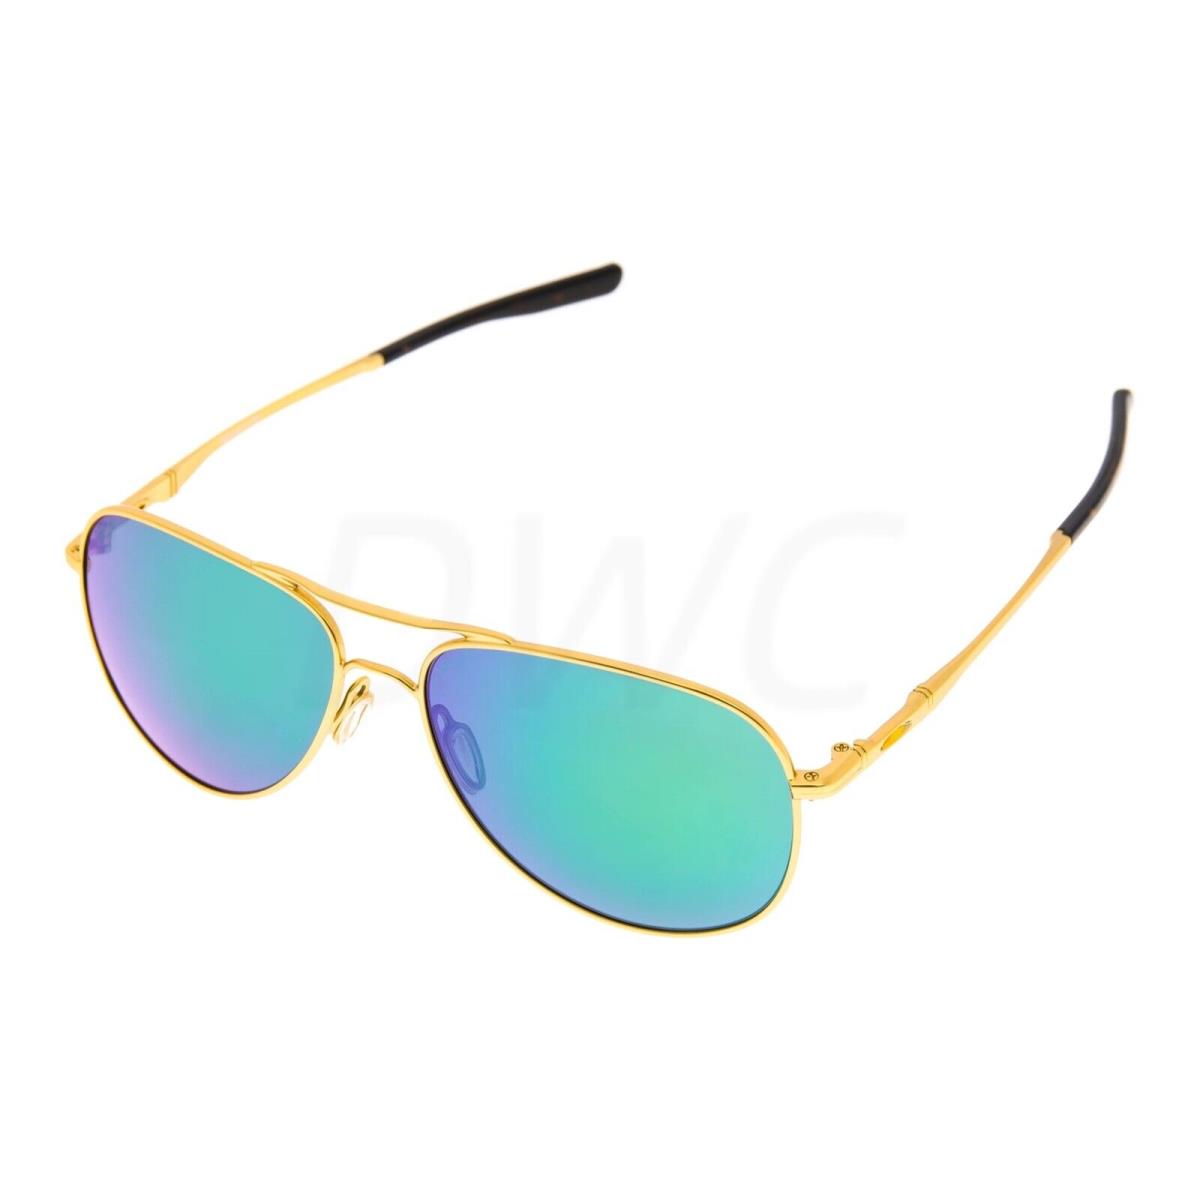 Oakley Elmont M OO4119-0358 Satin Gold/jade Iridium Sunglasses - Frame: Satin Gold, Lens: